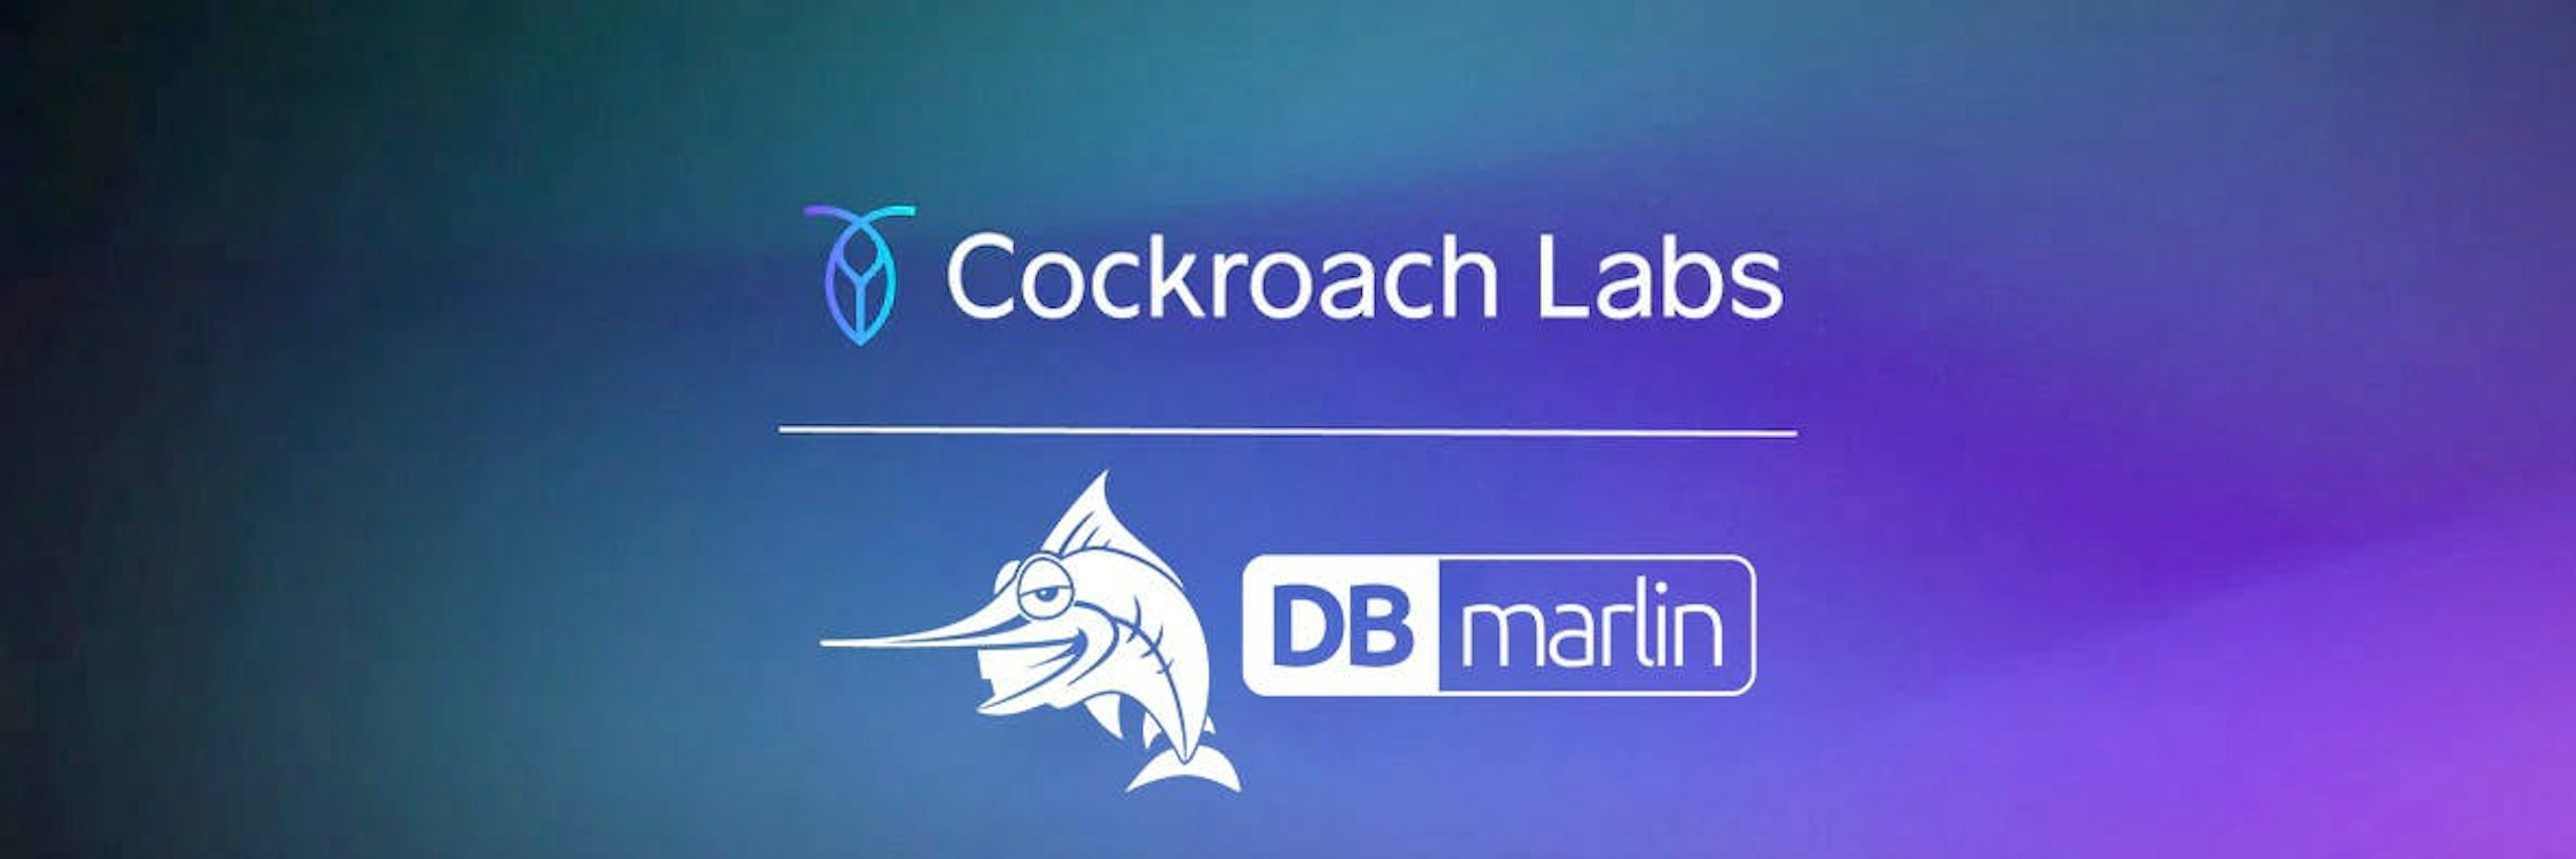 cockroach-labs-dbmarlin2